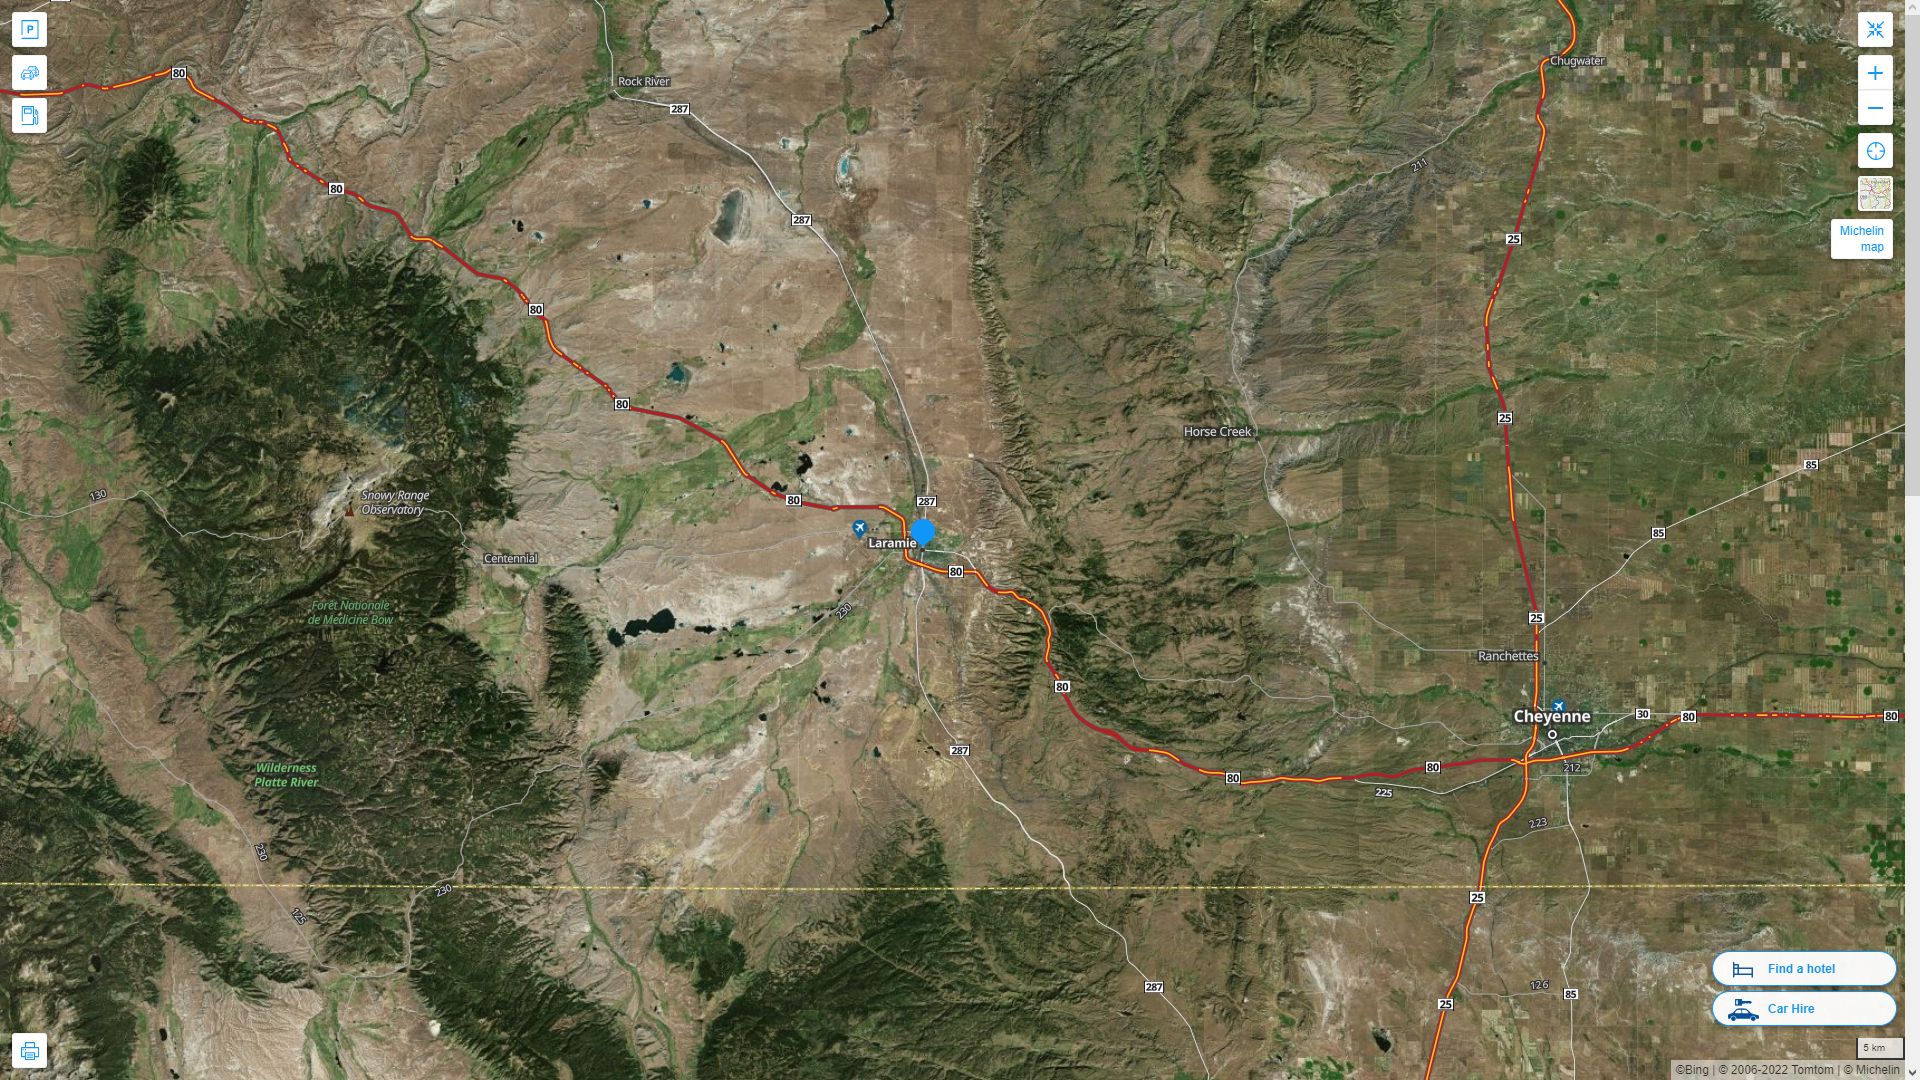 Laramie Wyoming Highway and Road Map with Satellite View